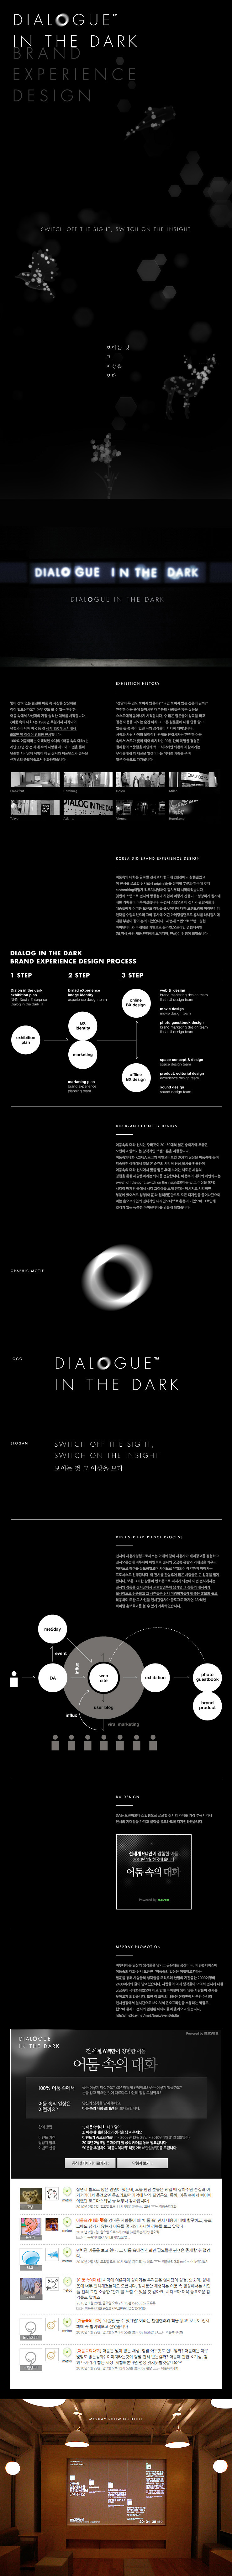 Total Branding Project Dialogue inthe dark